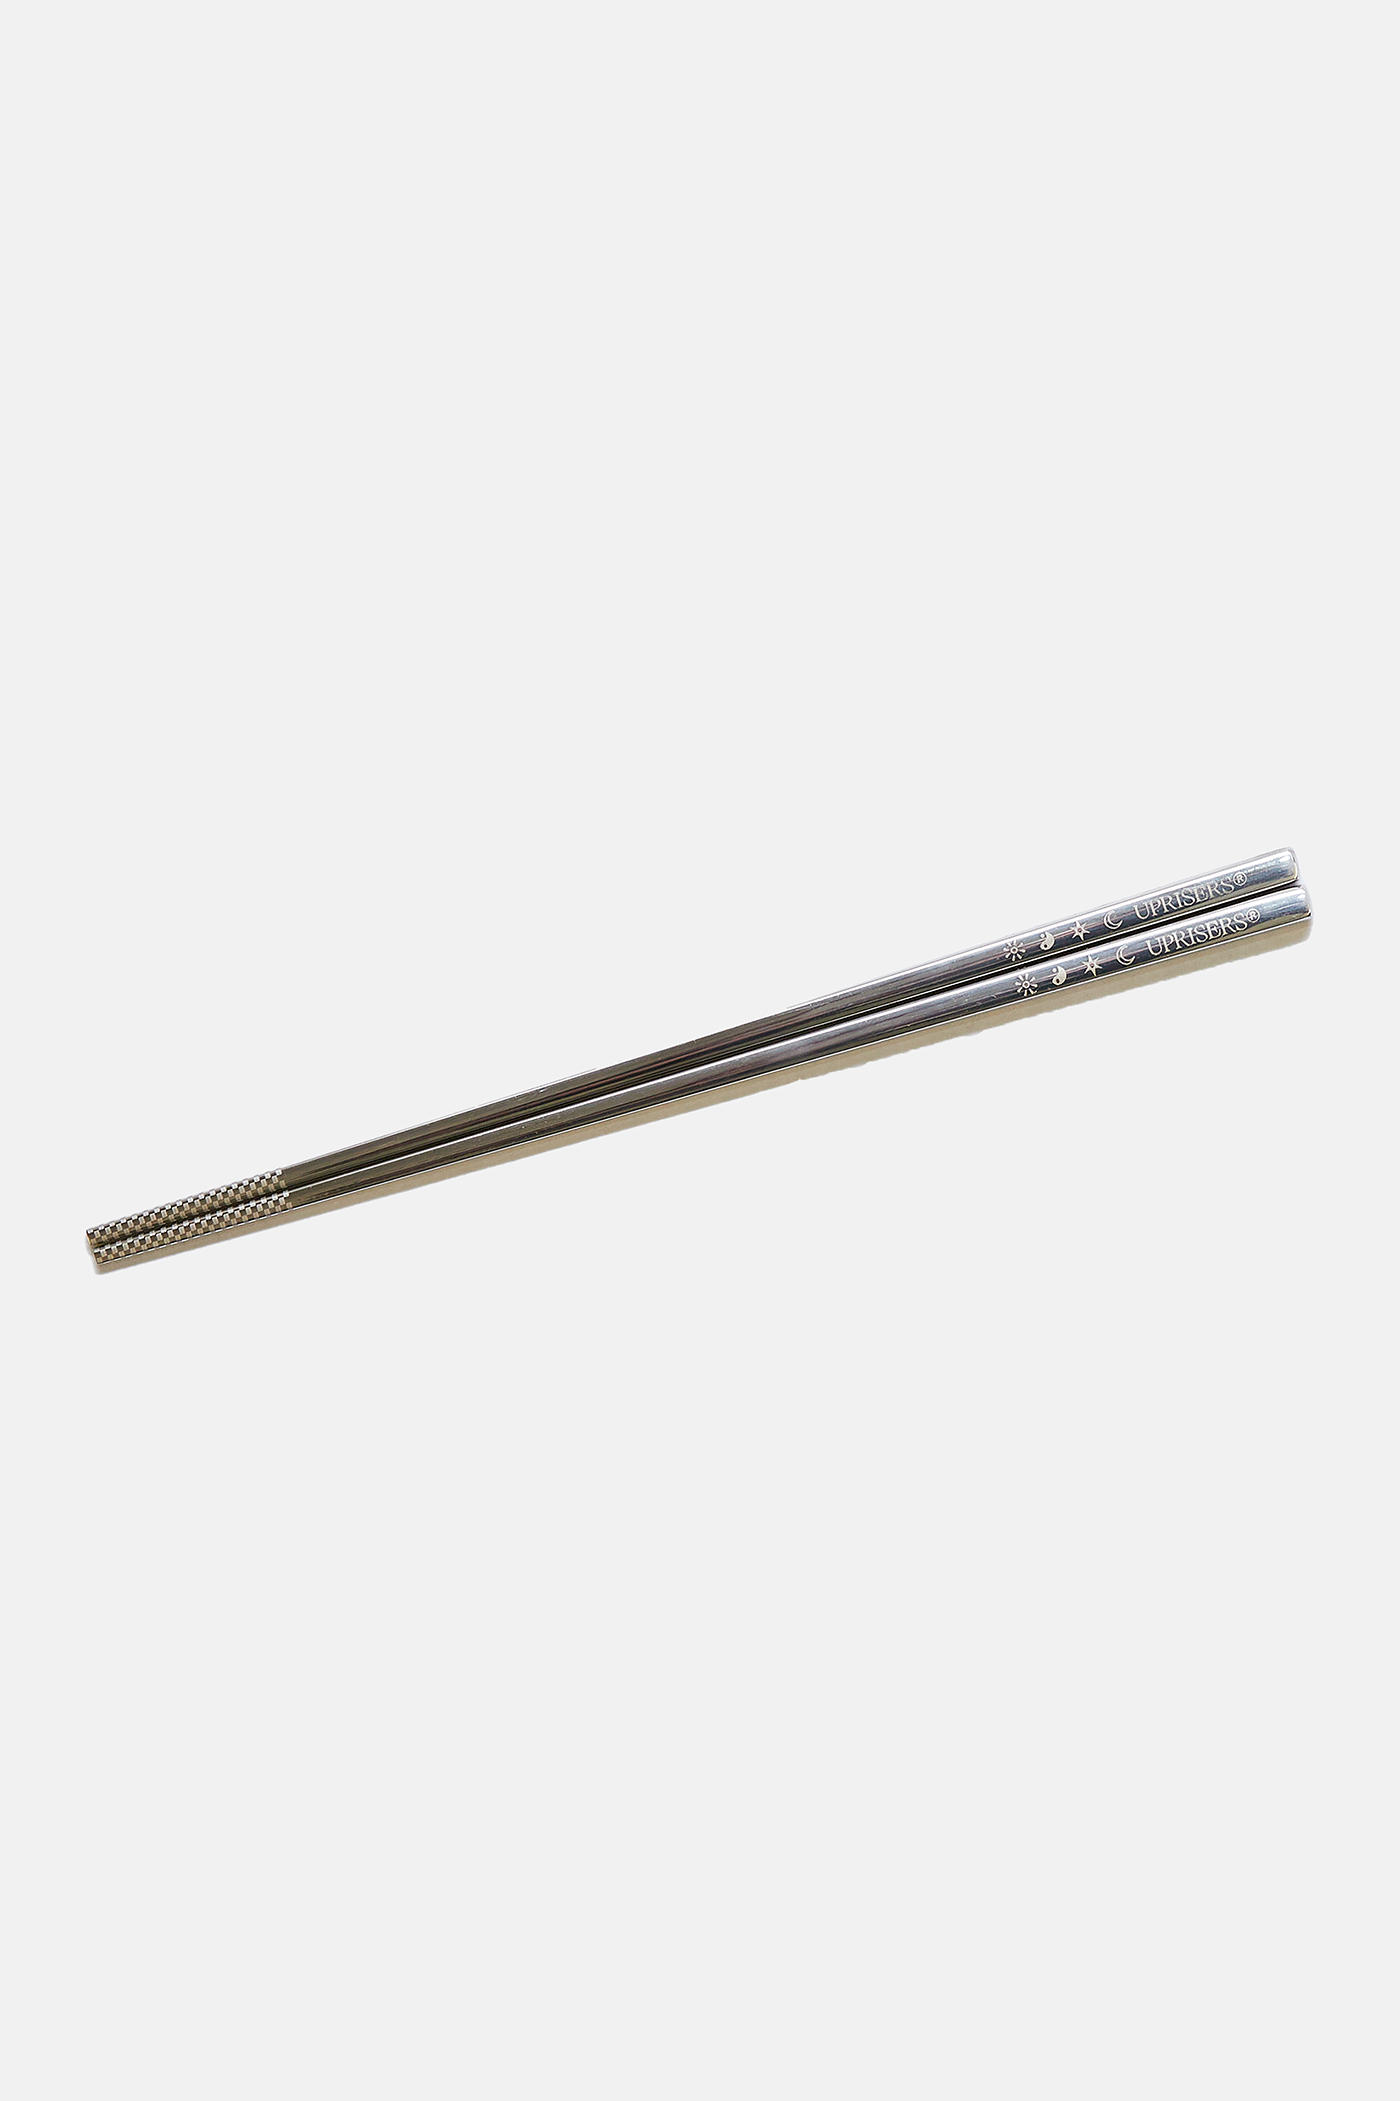 UPRISERS Stainless Steel Chopsticks